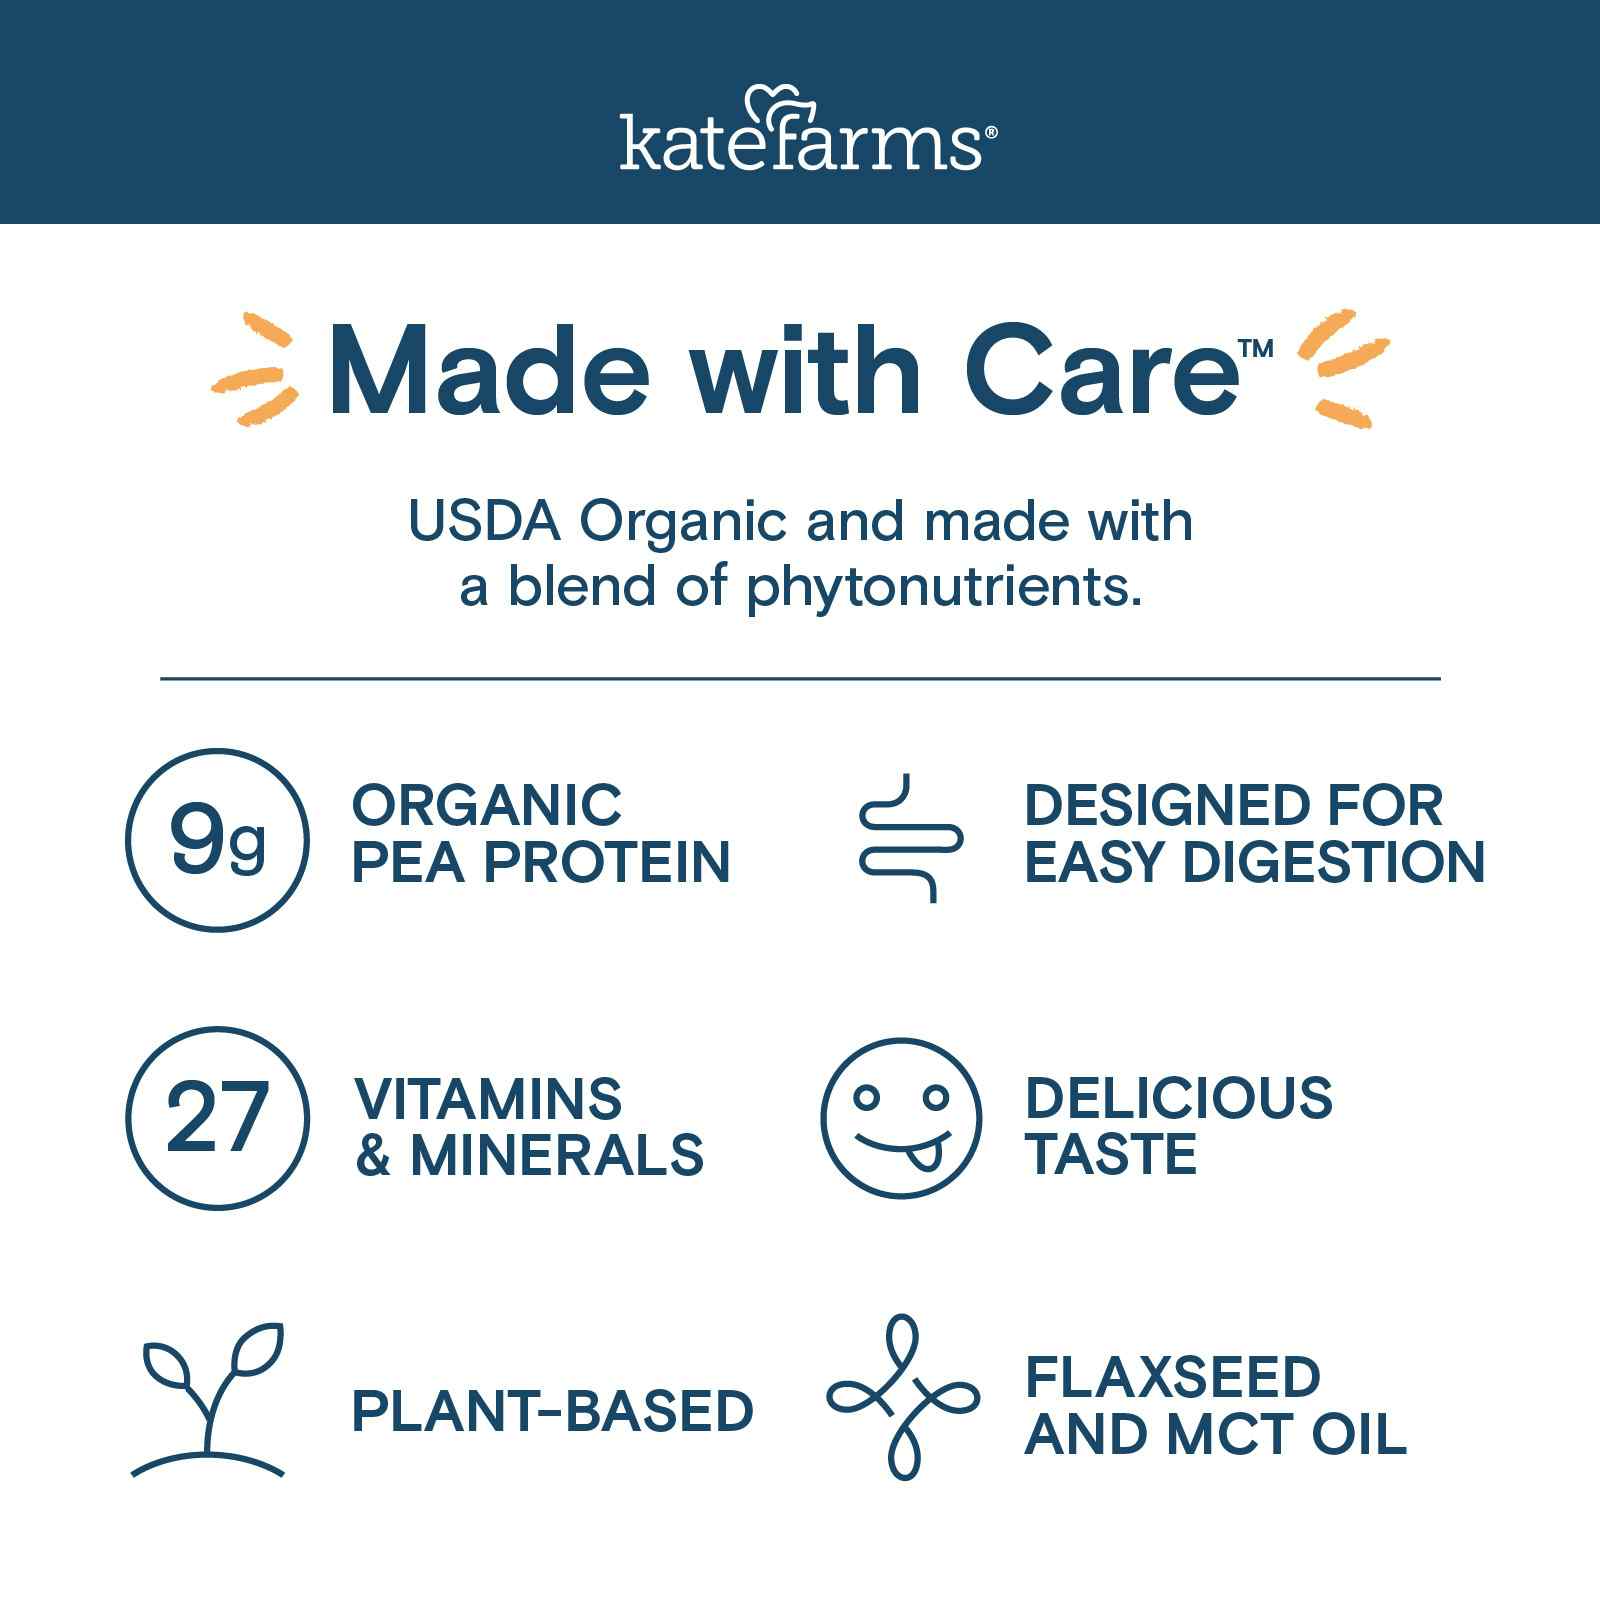 Kate Farms Pediatric Peptide 1.0 Sole-Source Nutrition Formula, Vanilla, 8.45 oz.